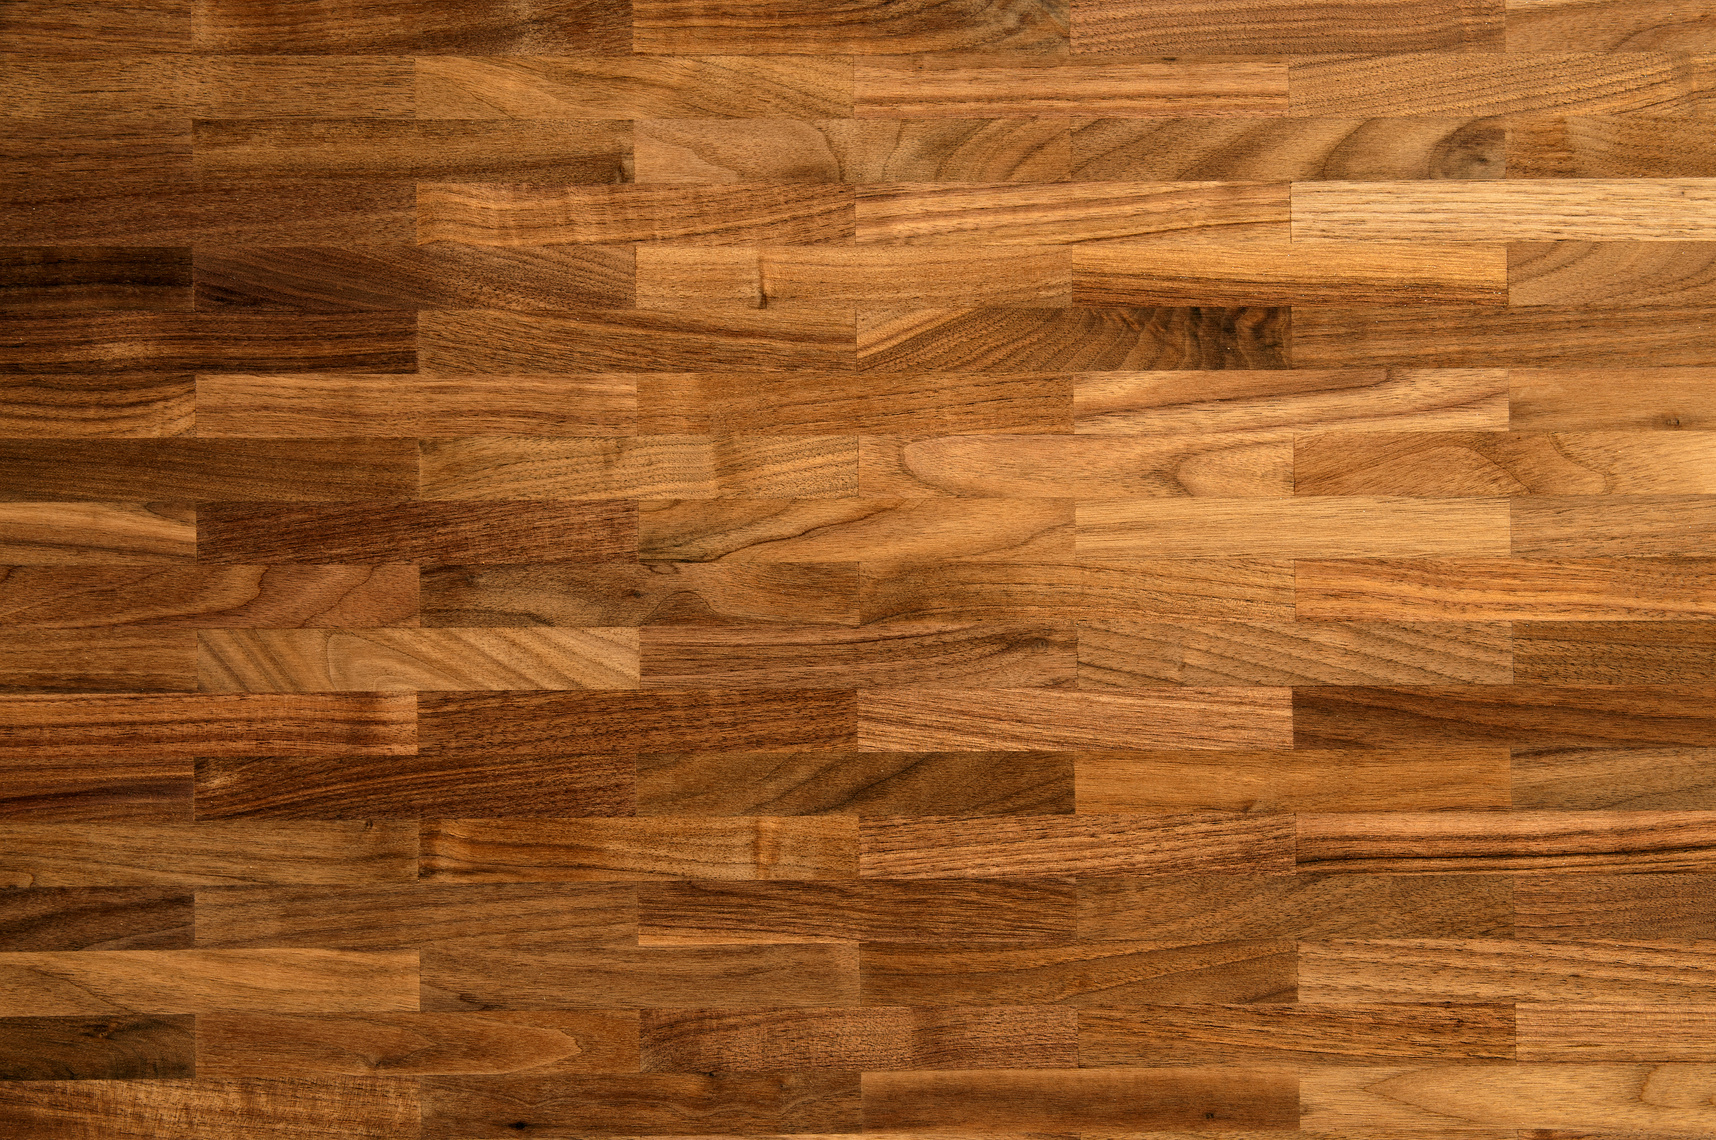 Wood texture - walnut parquet floor